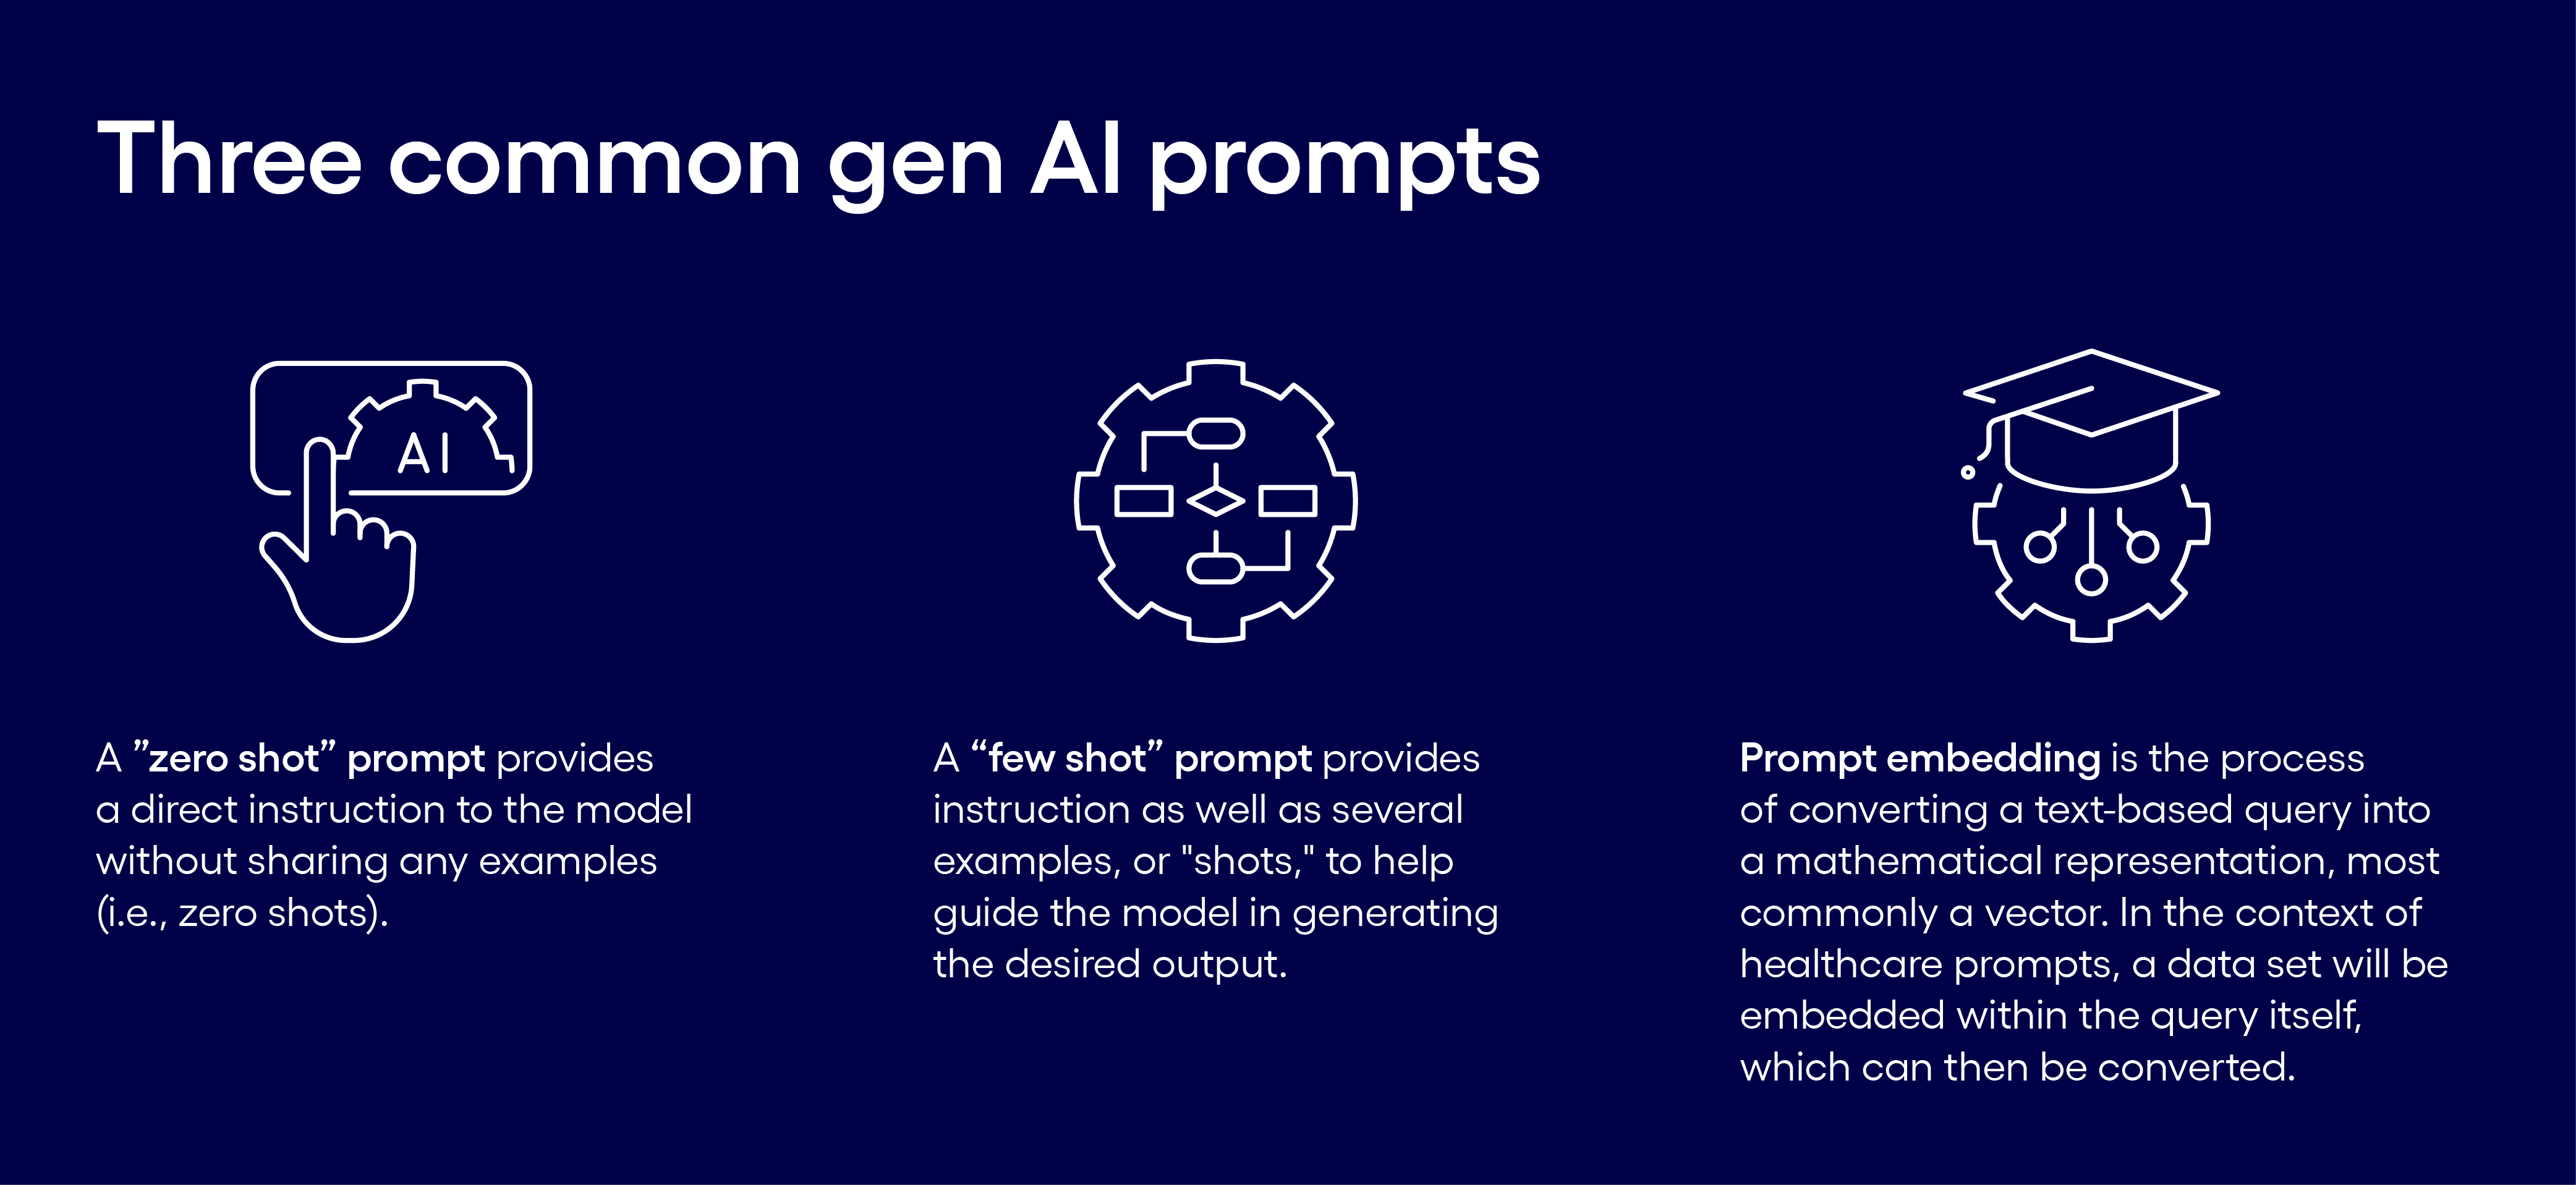 Three common AI prompts